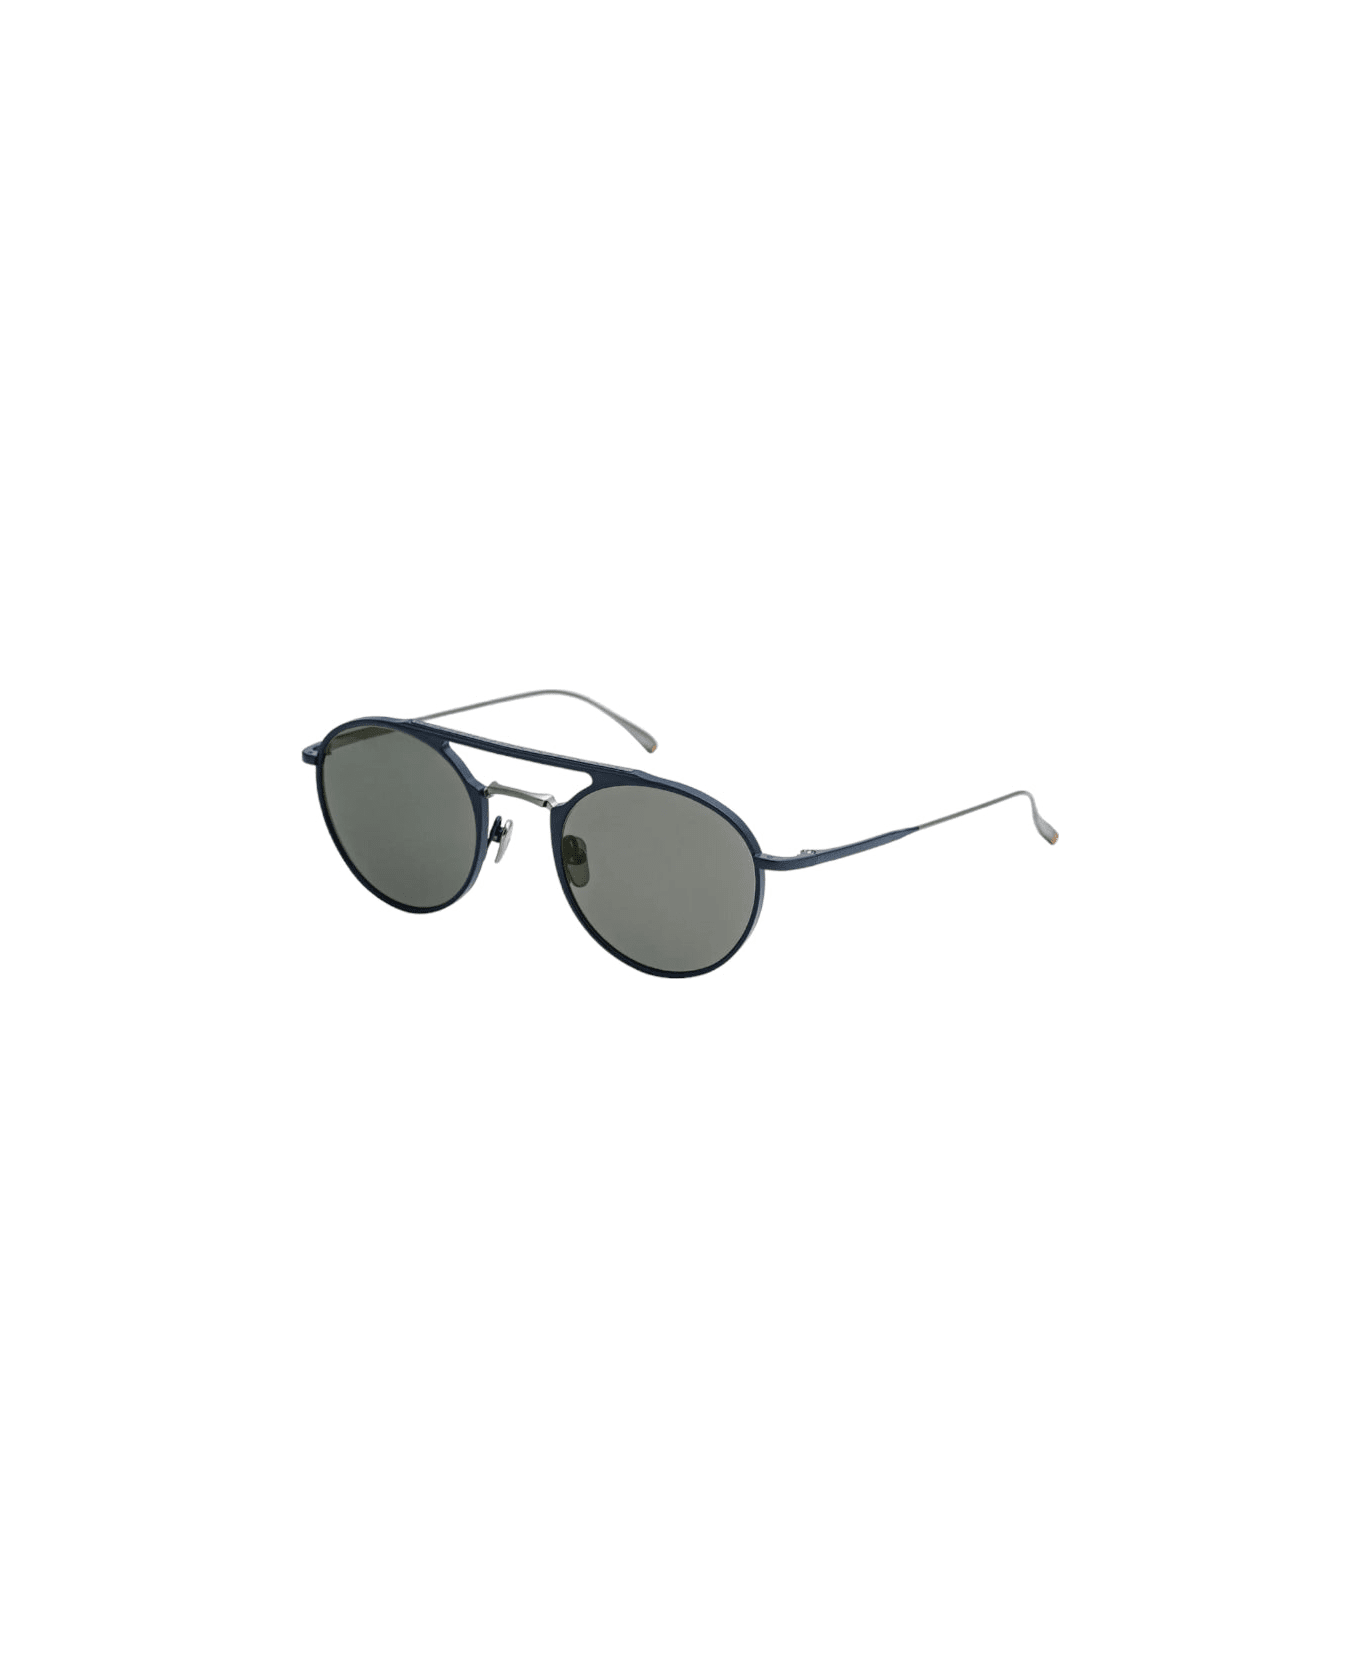 Masunaga Suzu - Limited Edition X Kenzo - Blue Navy Sunglasses